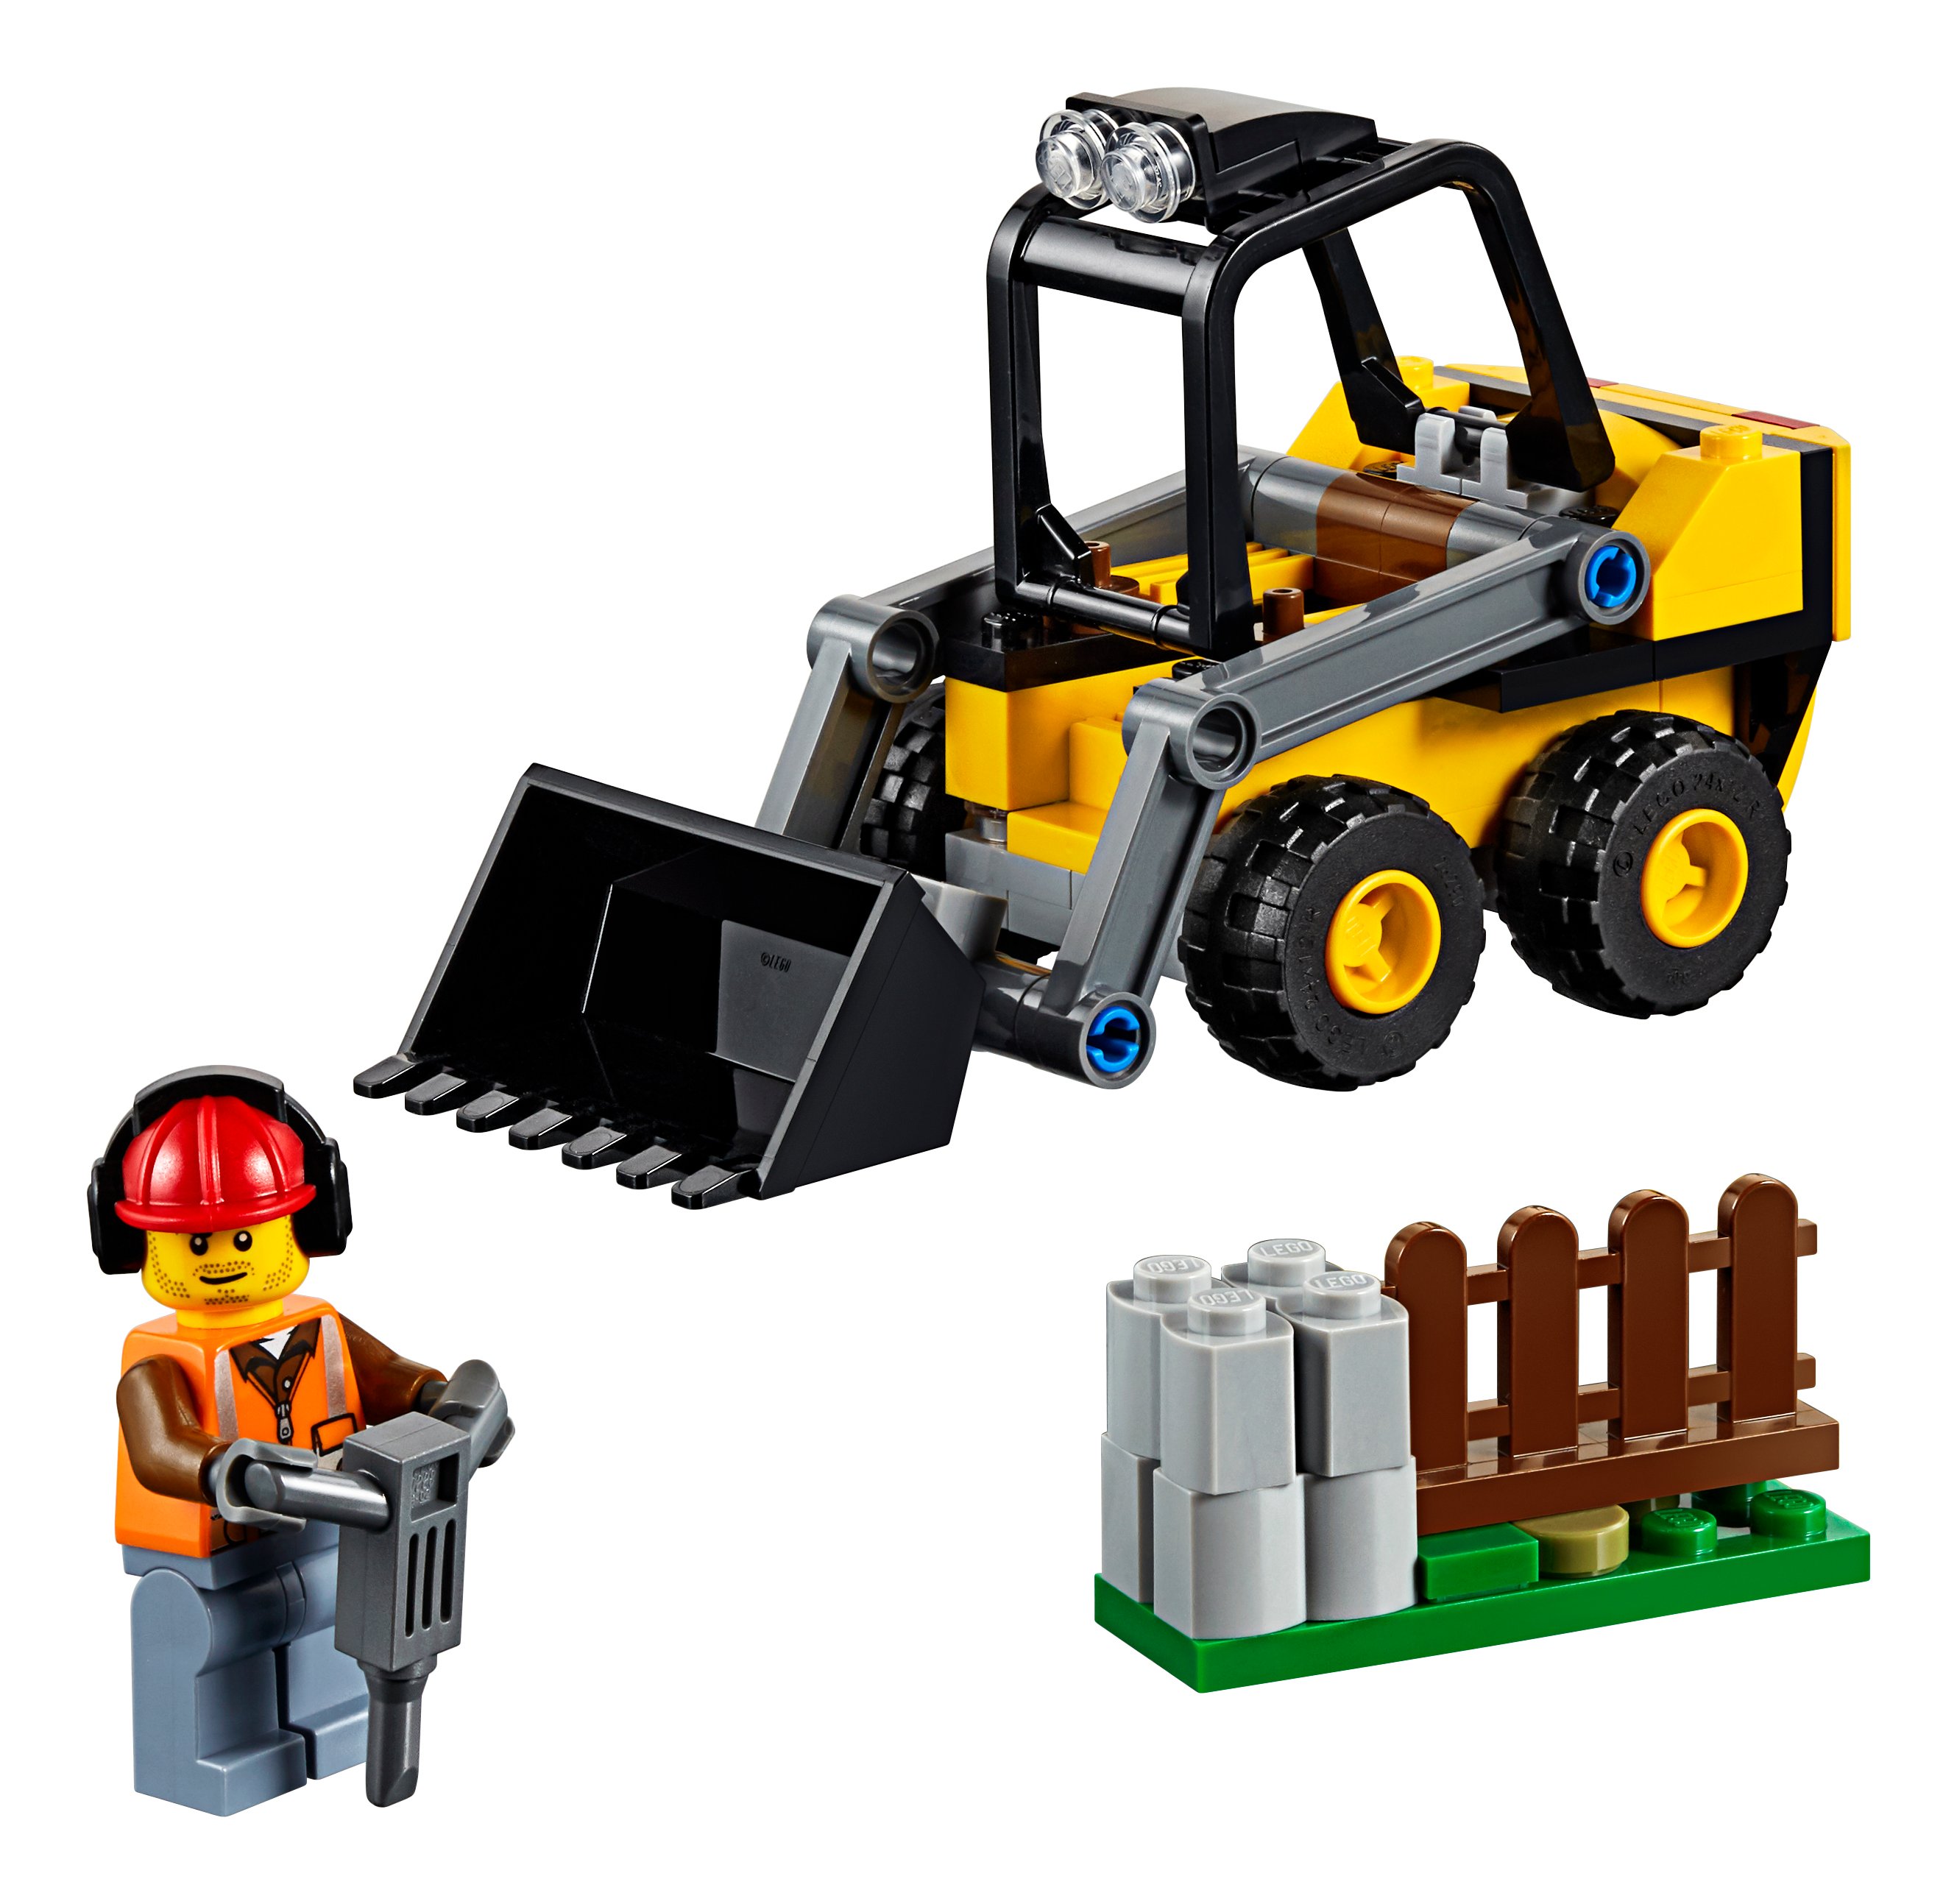 LEGO City - Construction Loader (60219)